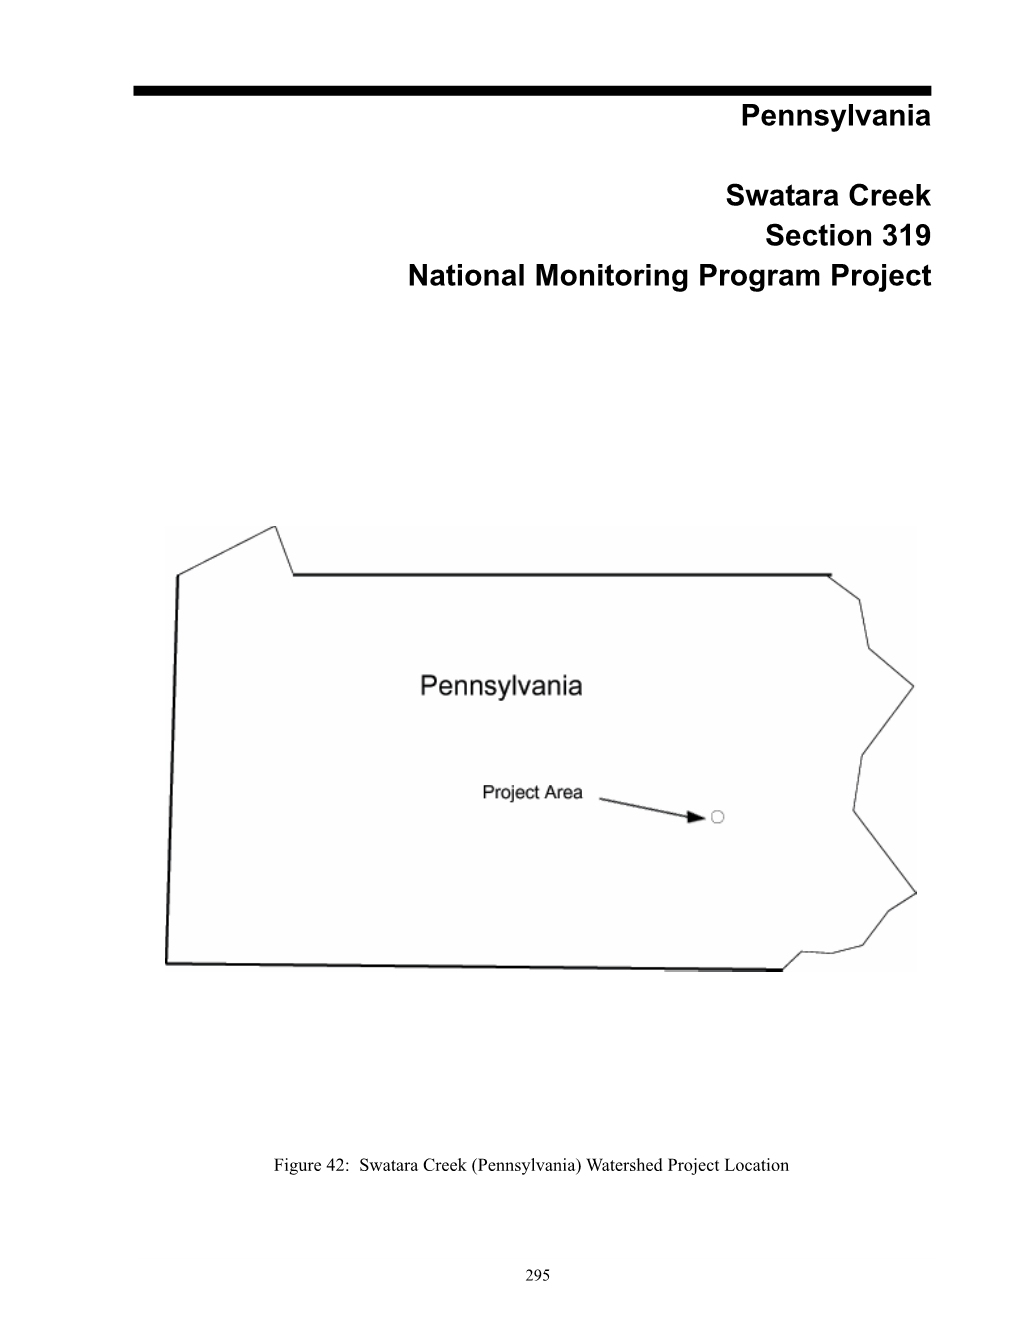 Pennsylvania Swatara Creek Section 319 National Monitoring Program Project